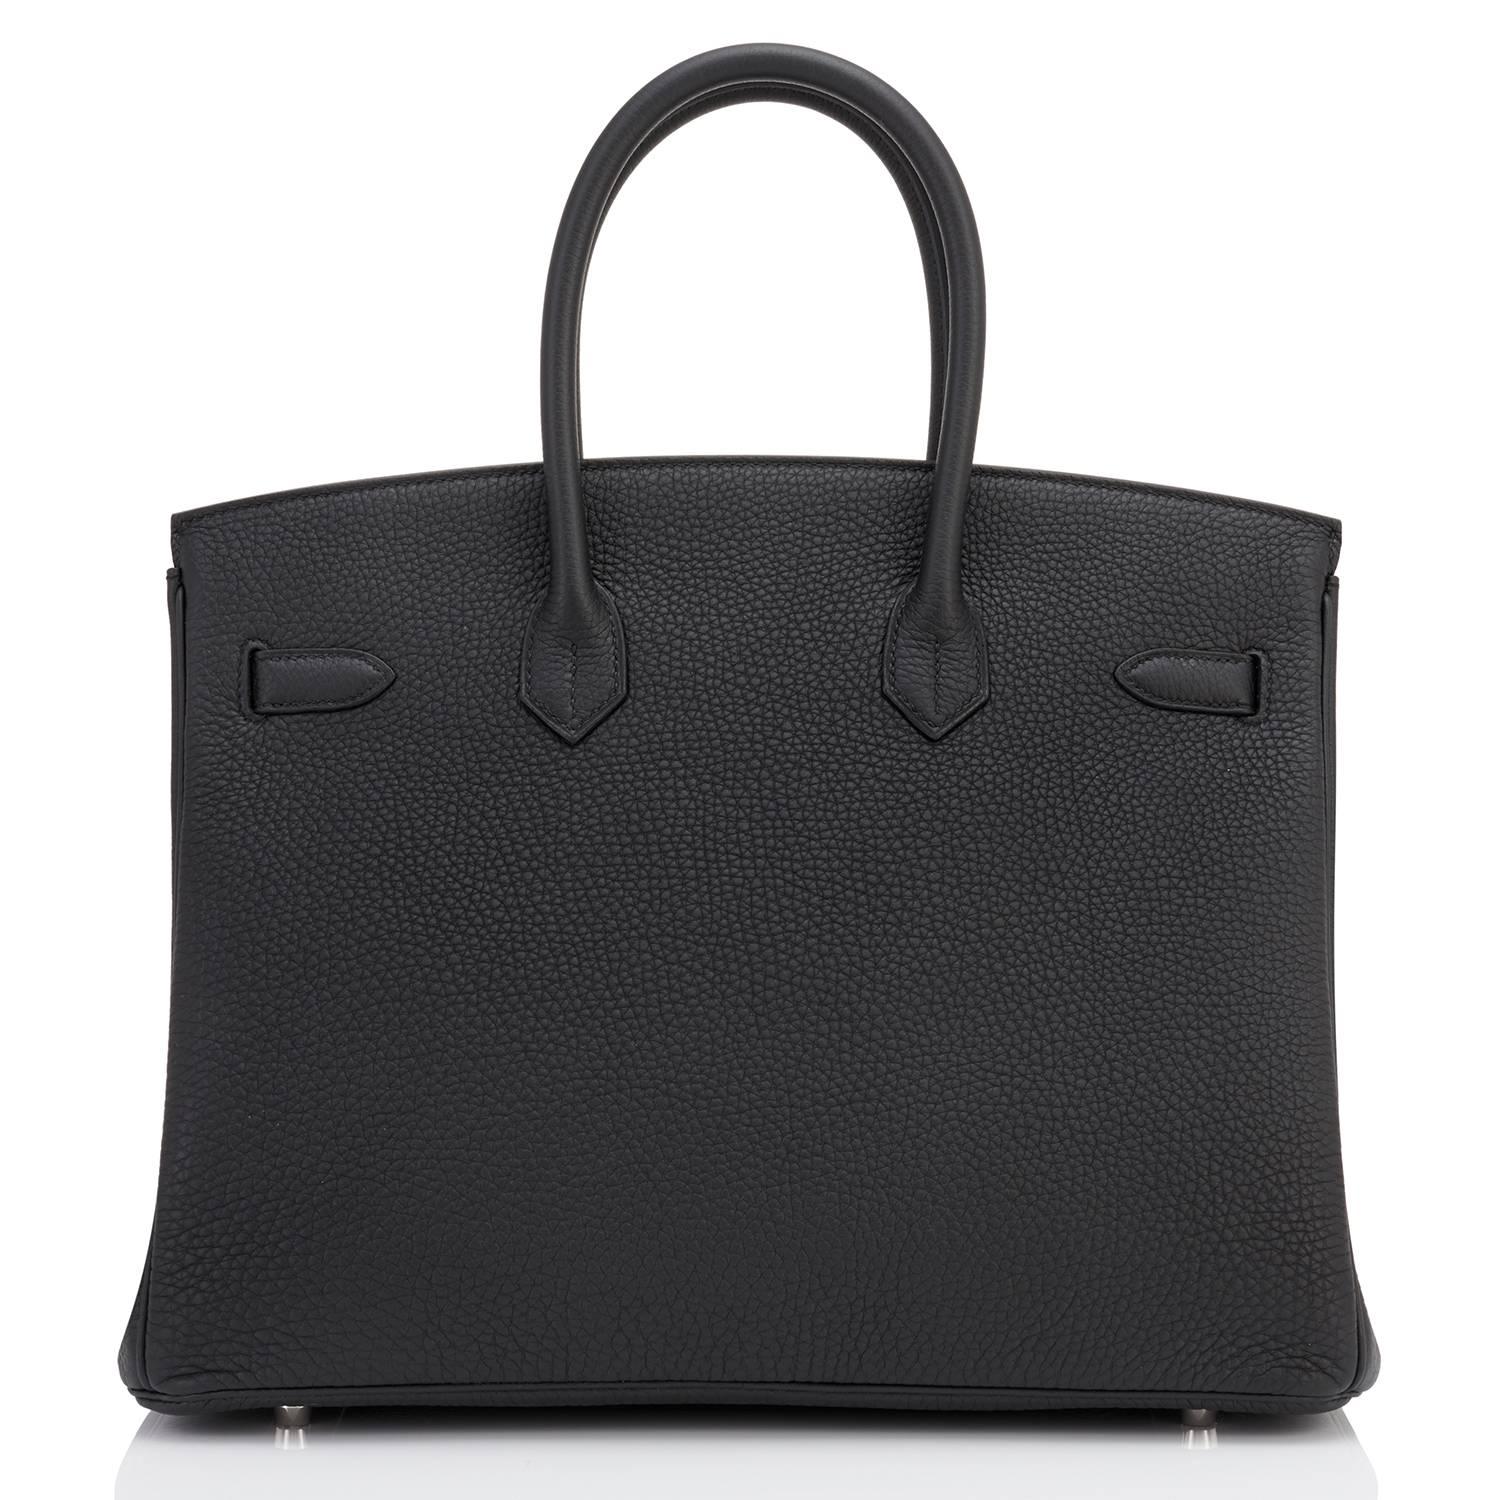 Women's or Men's Hermes Birkin 35cm Black Togo Palladium Hardware Bag